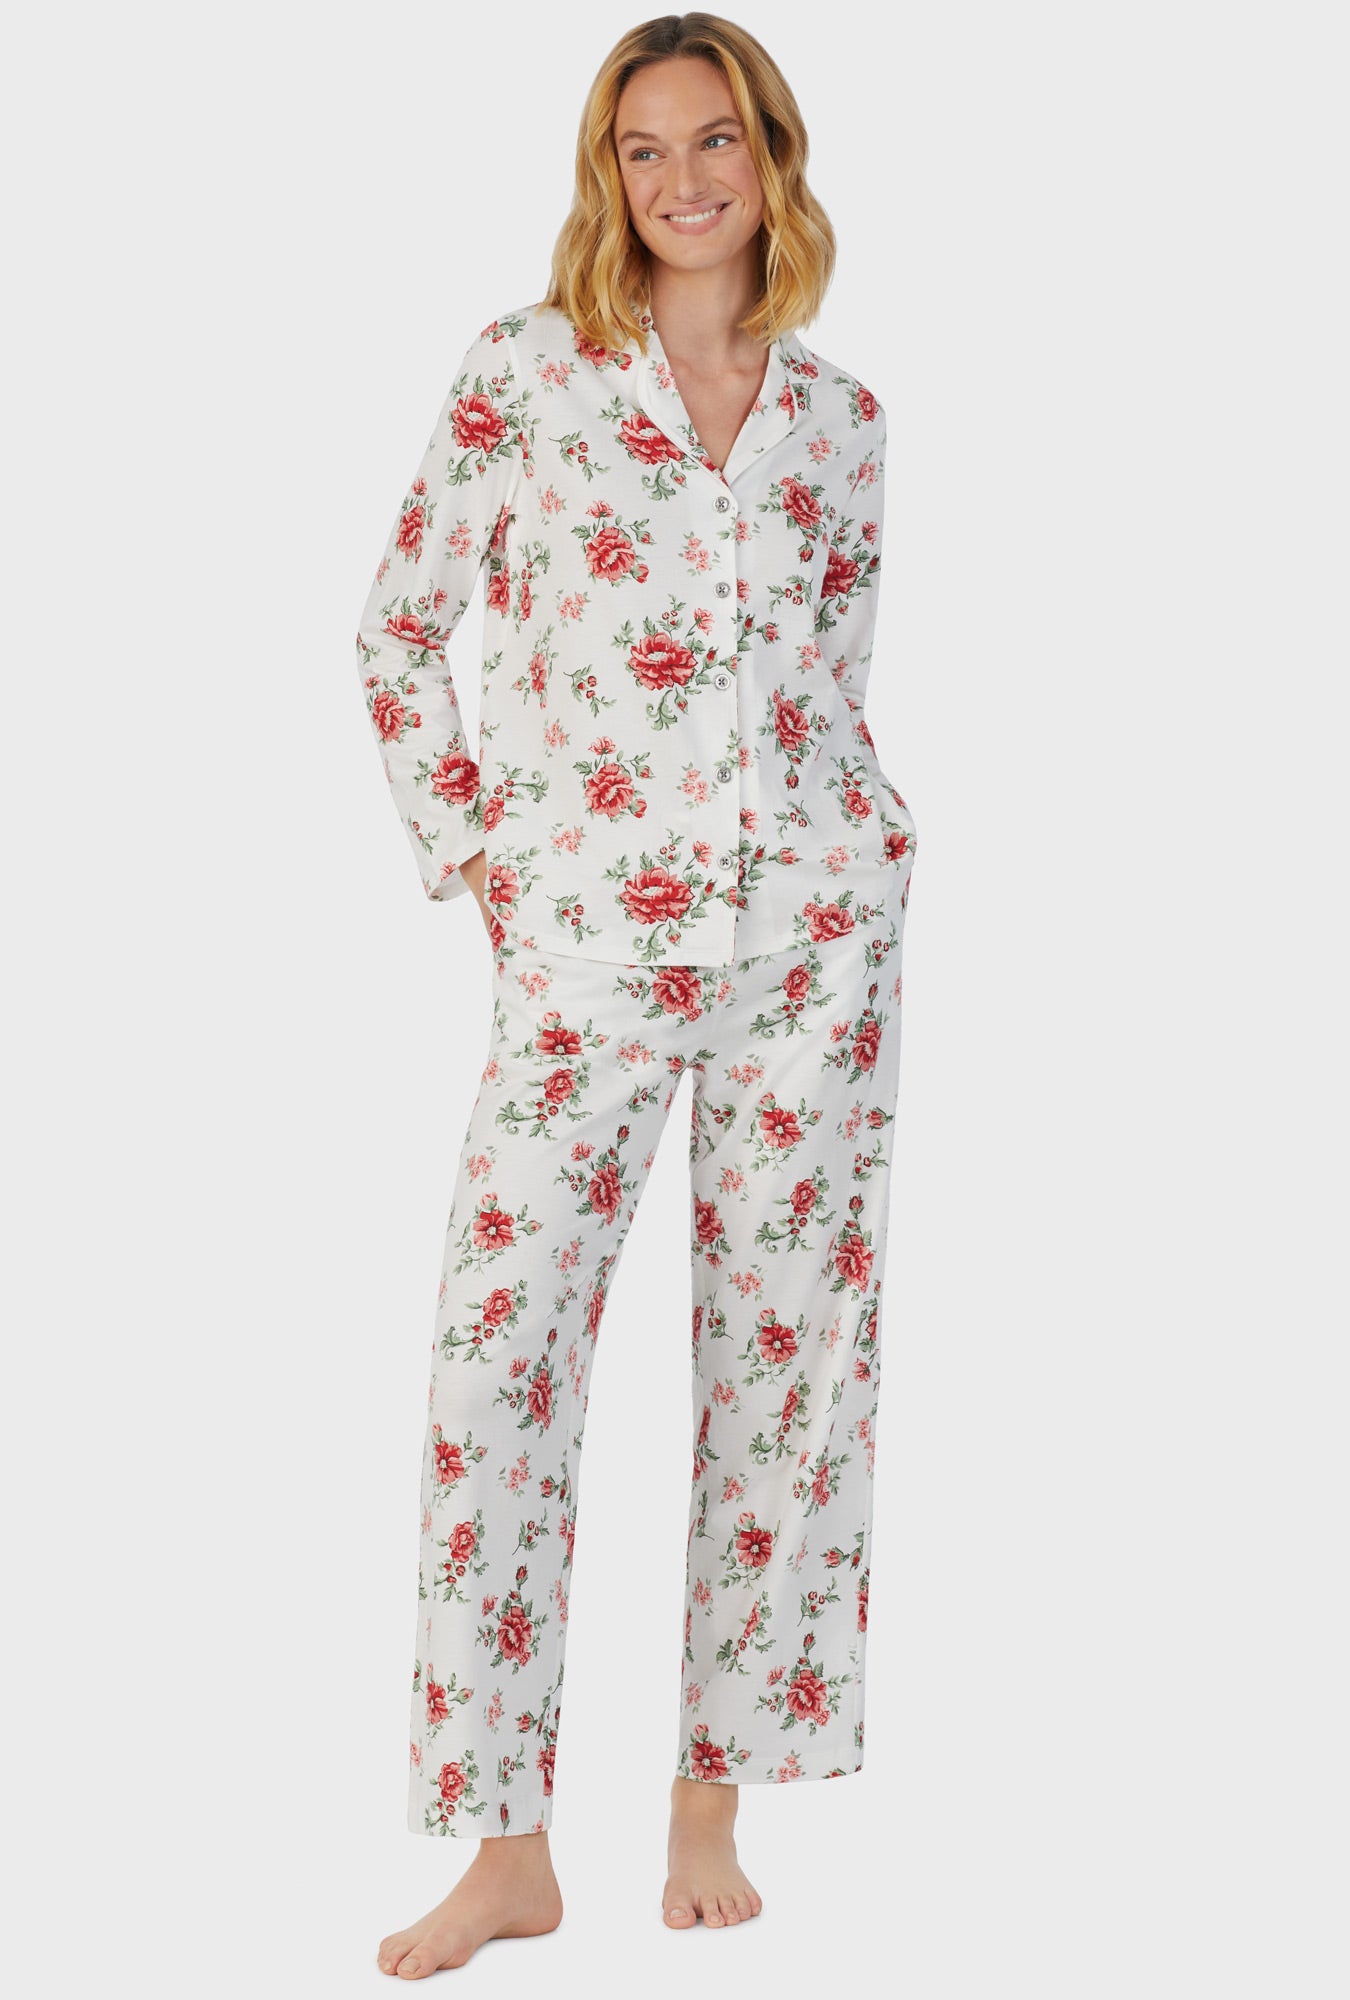 A lady wearing white long sleeve long royal garden pajama set.